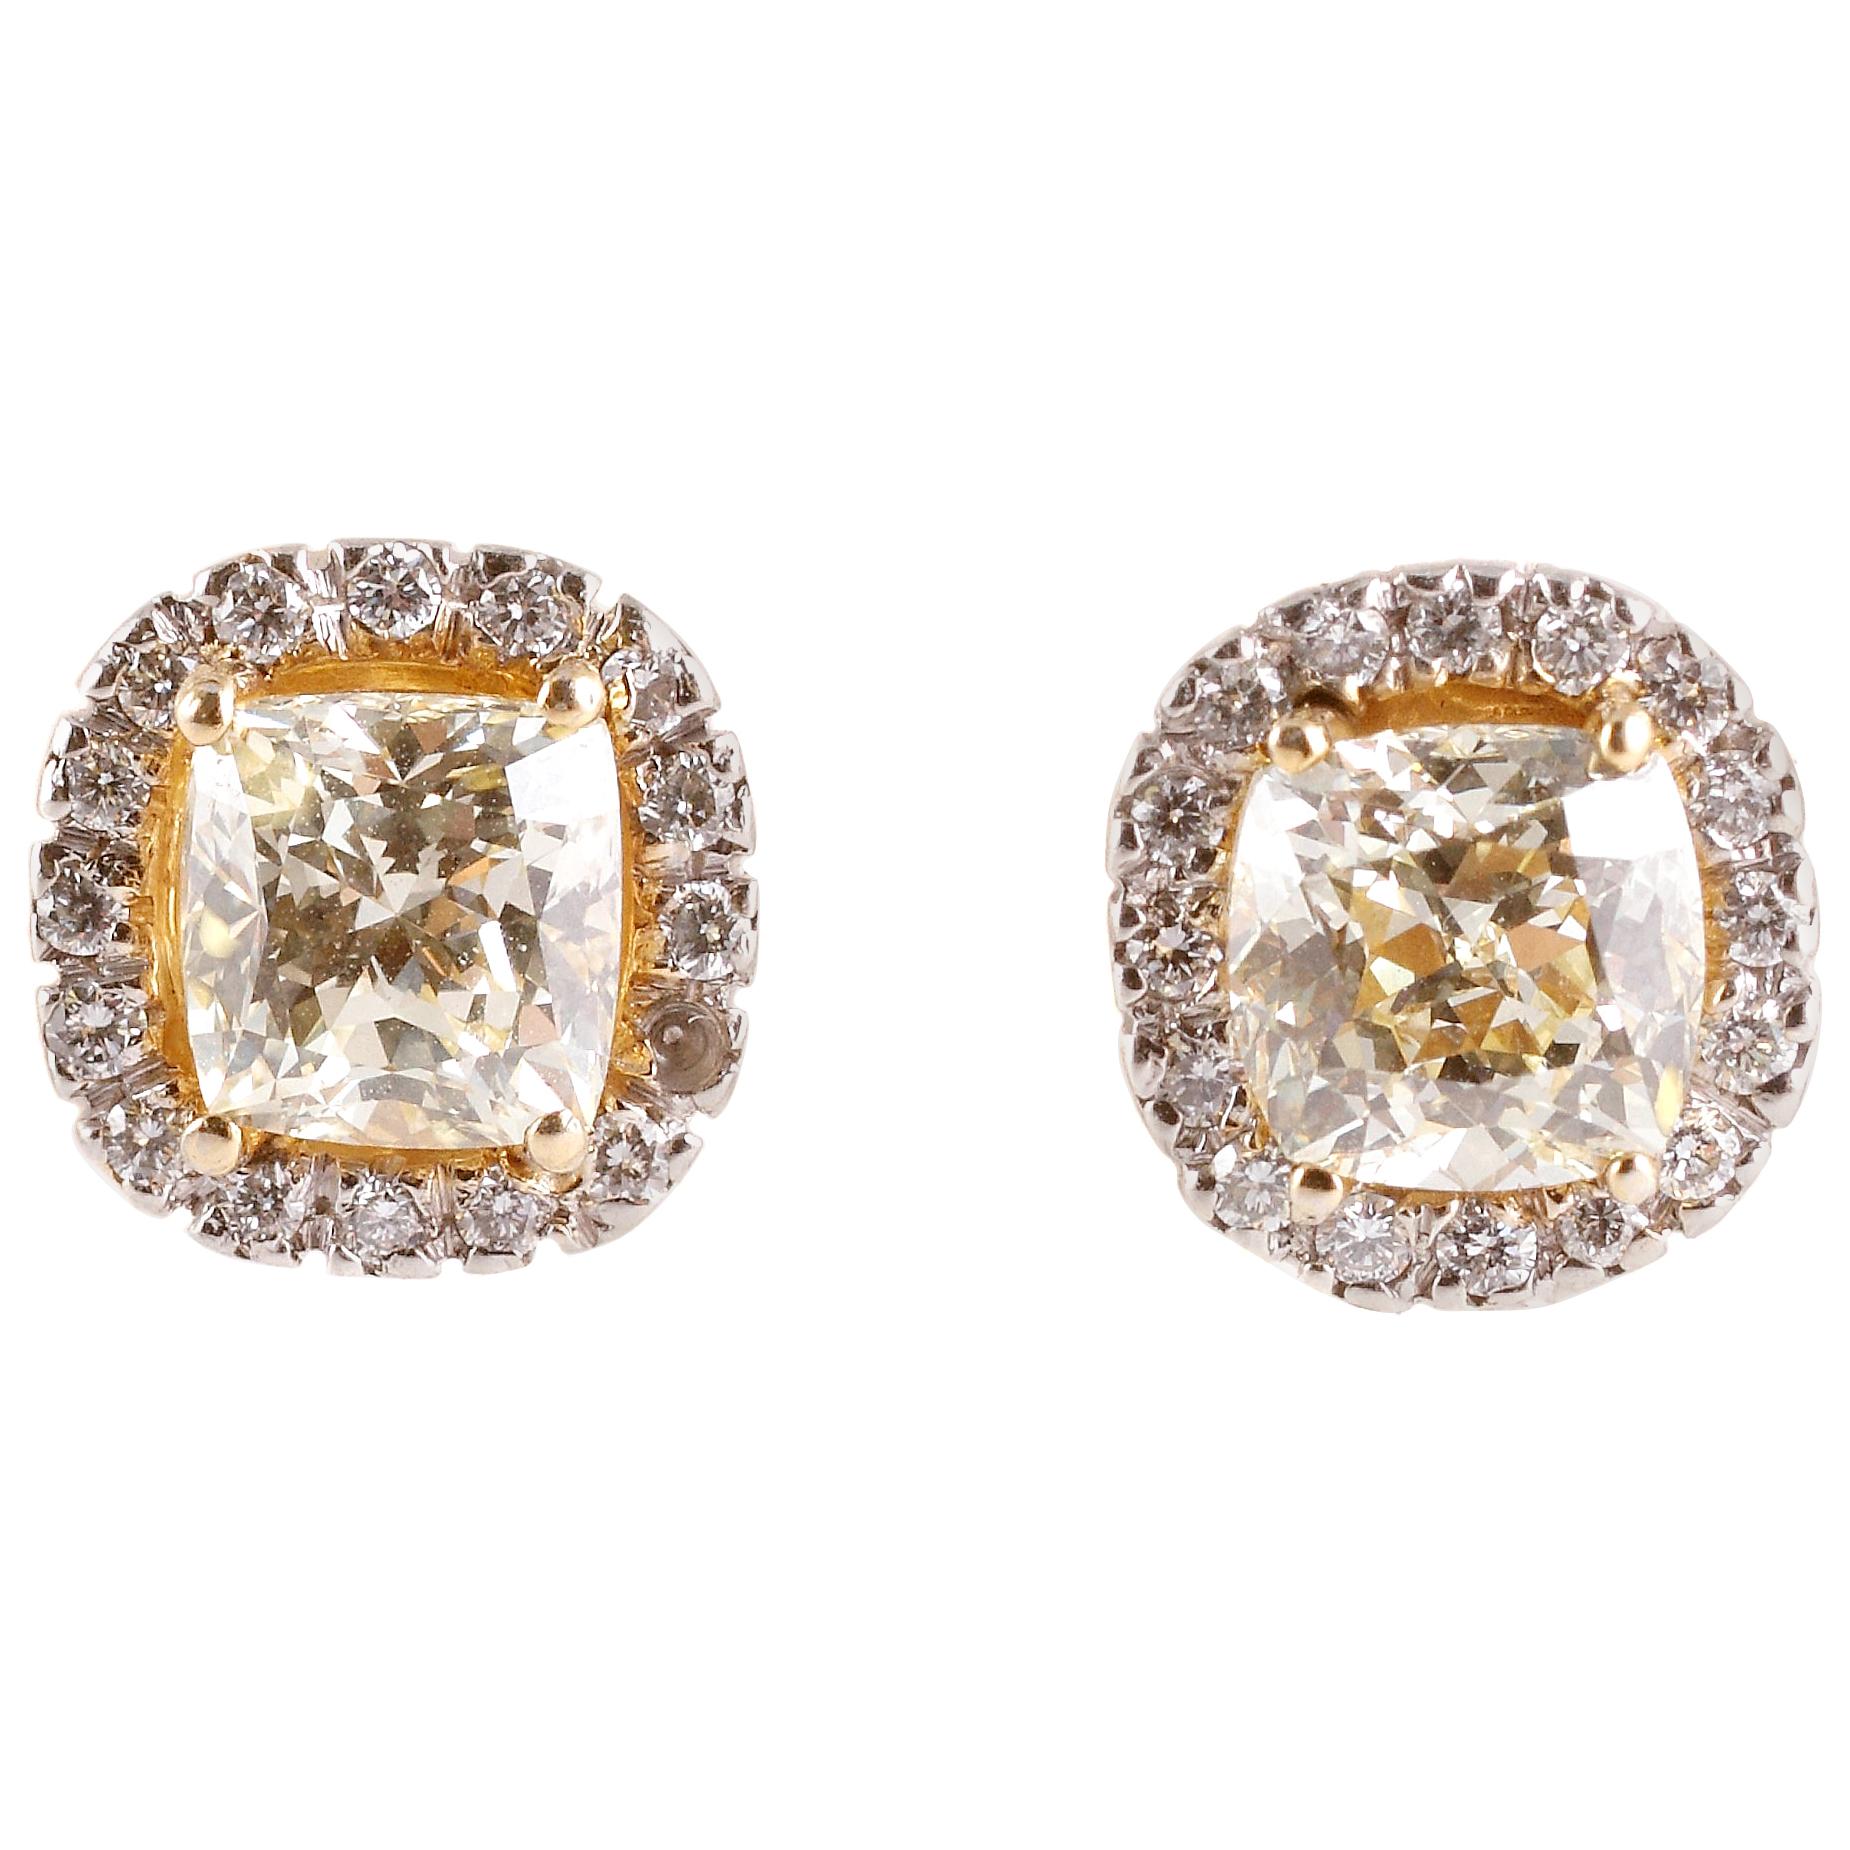 White Gold Fancy Yellow Diamond and Diamond Earrings